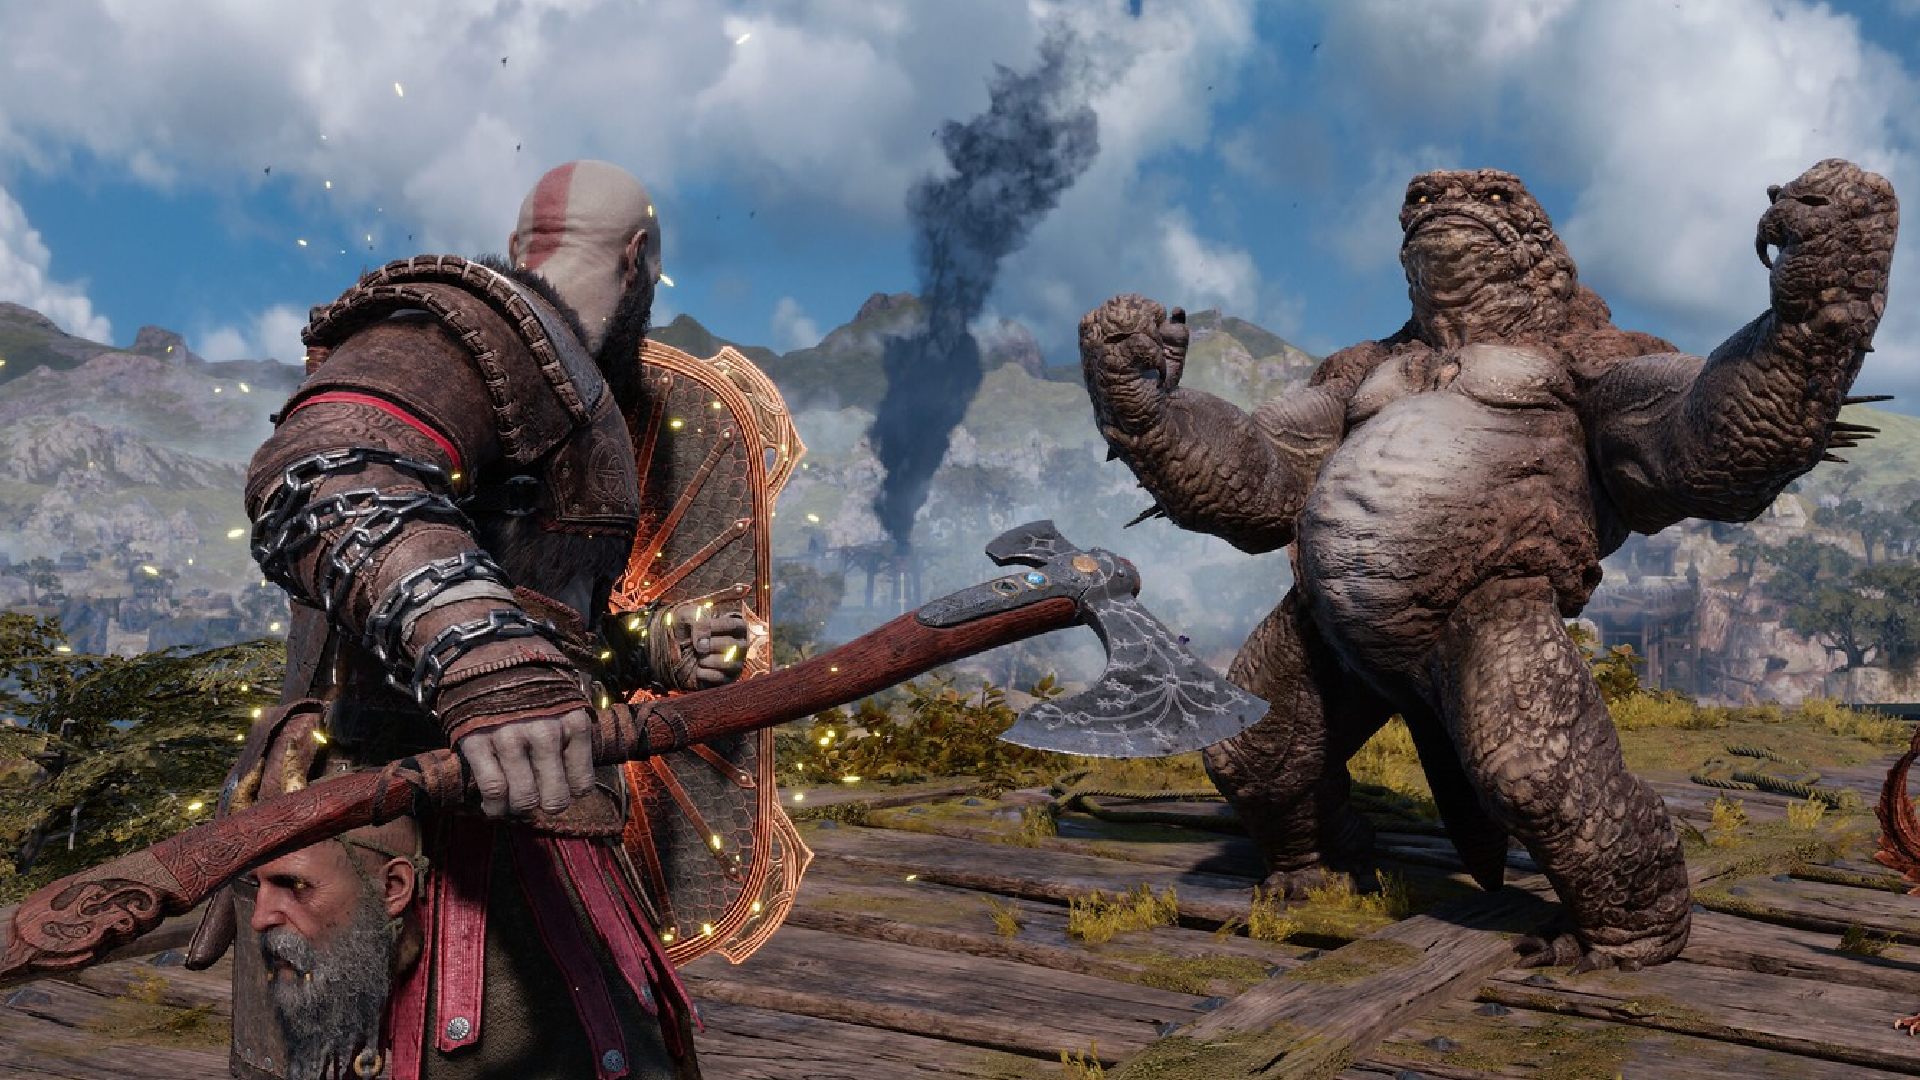 God of War Ragnarok Weapons: Kratos can be seen holding the axe